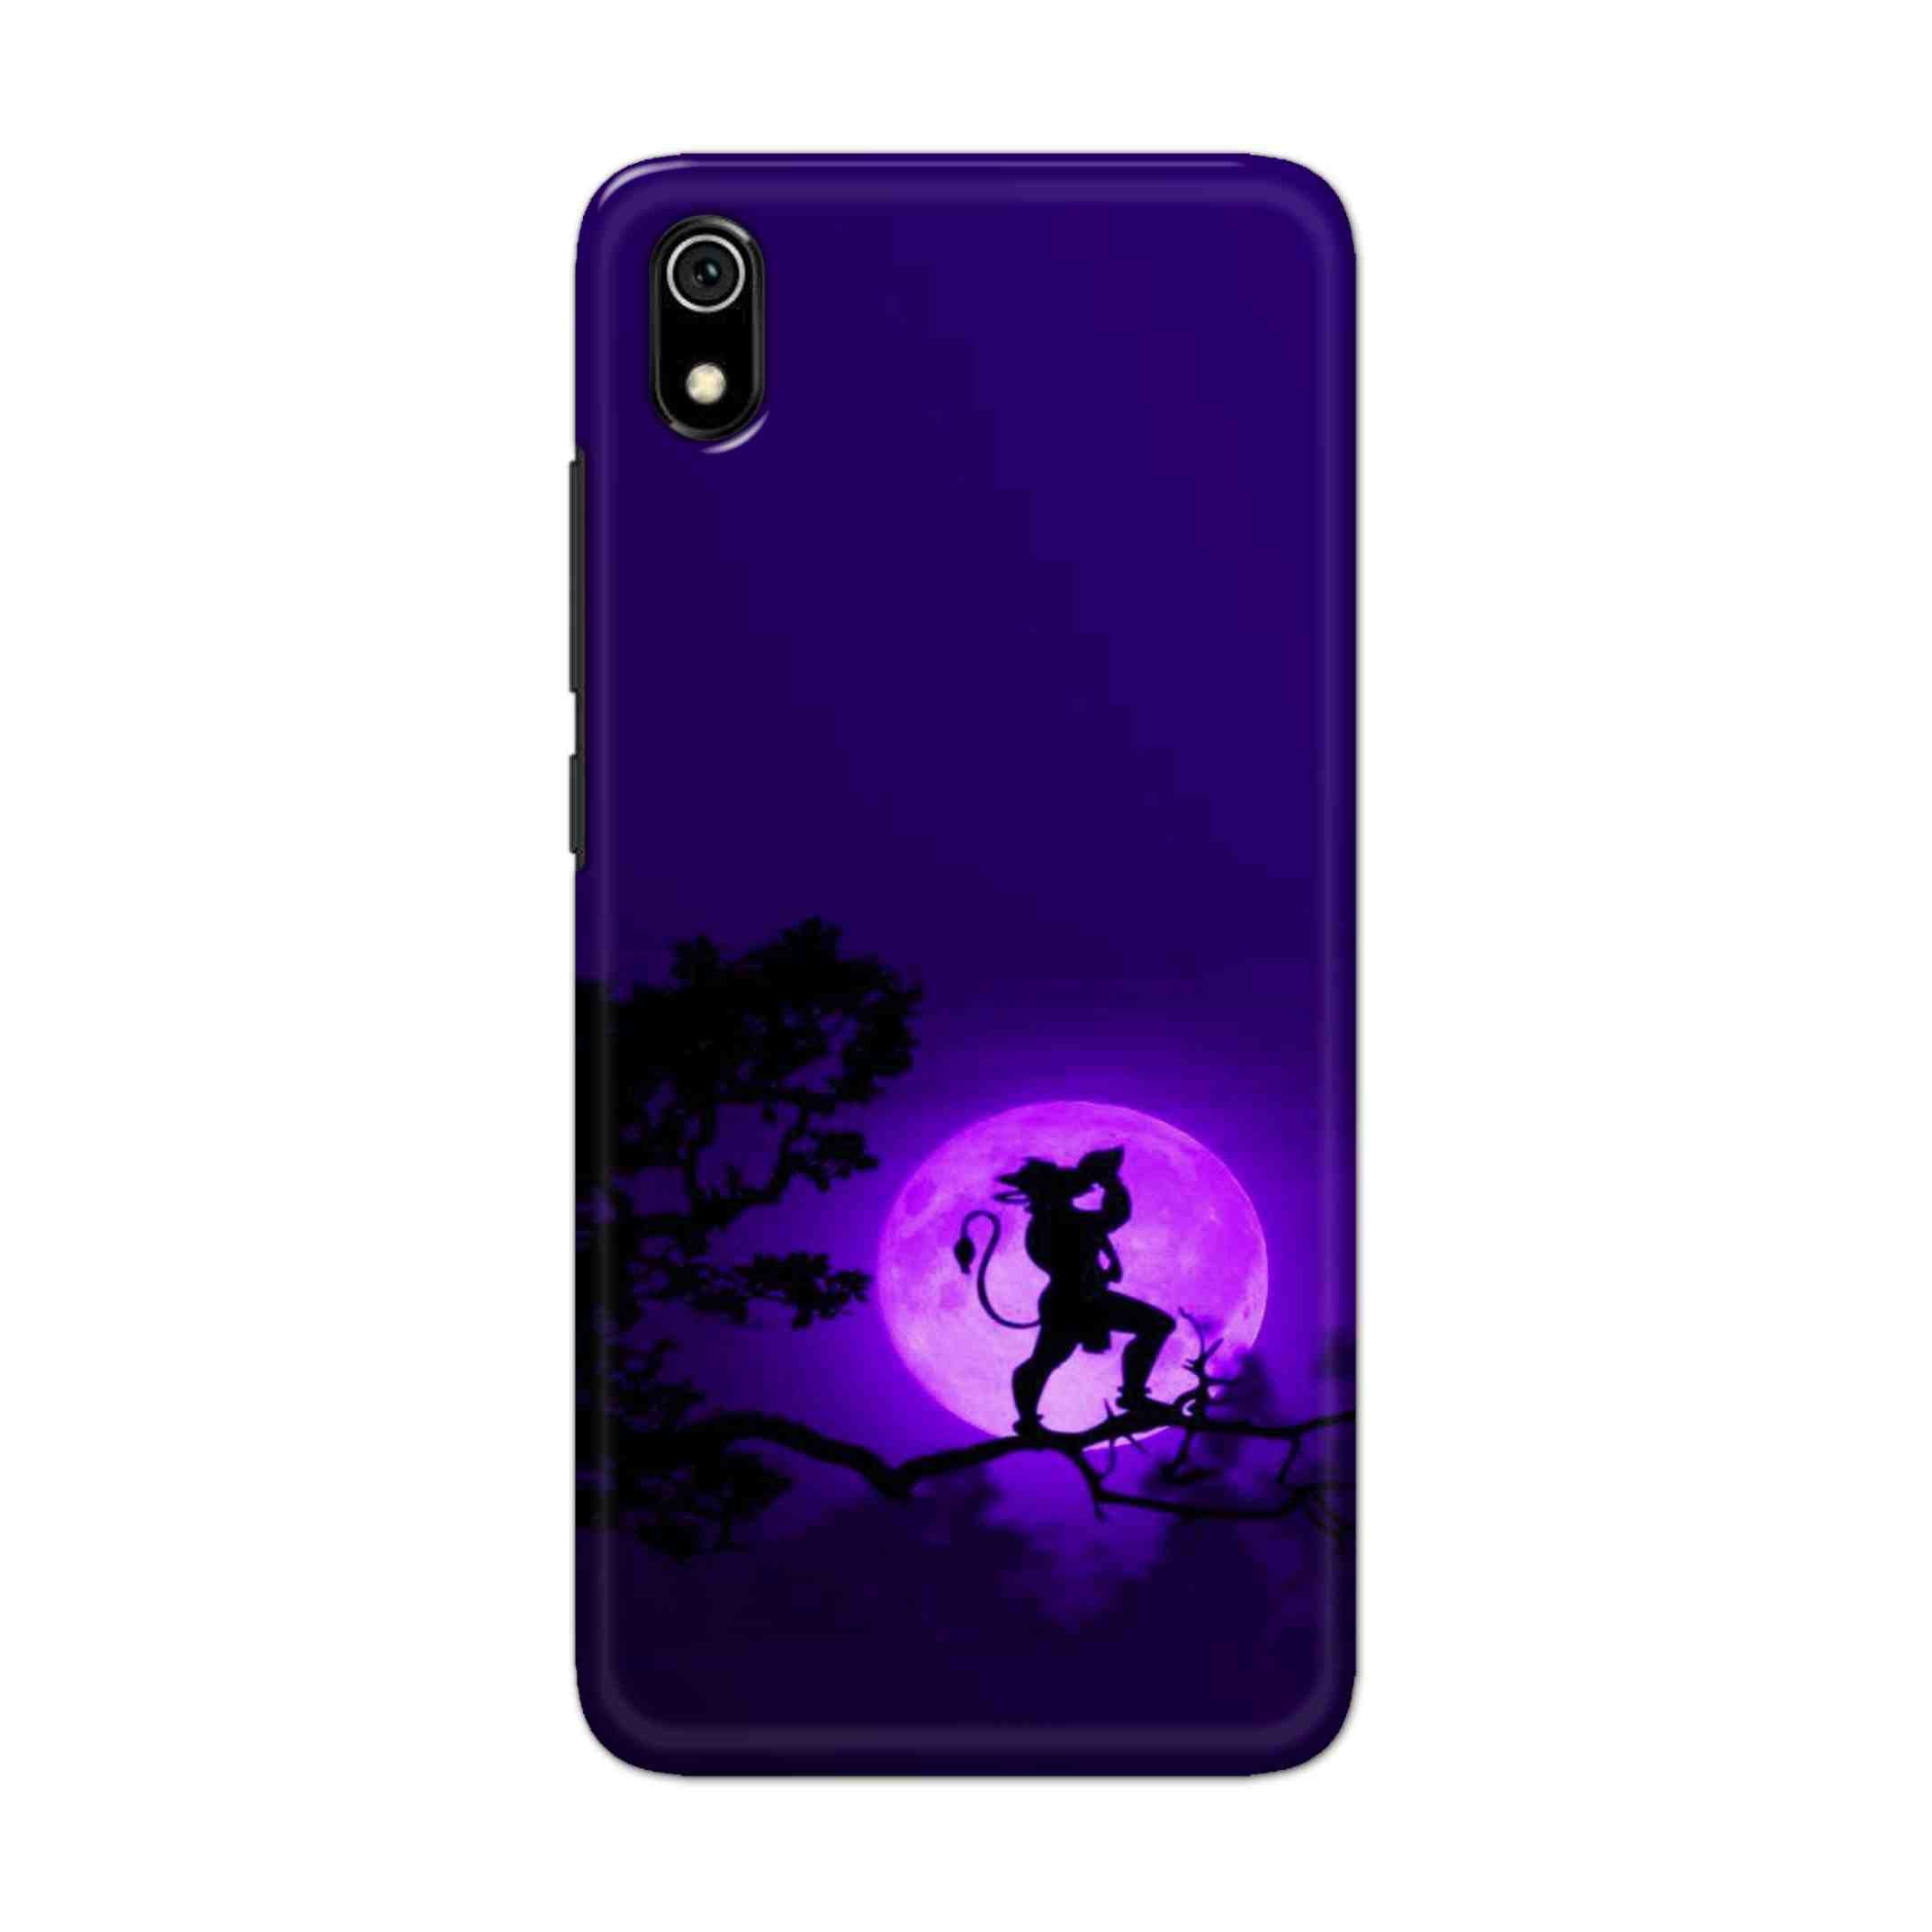 Buy Hanuman Hard Back Mobile Phone Case Cover For Xiaomi Redmi 7A Online